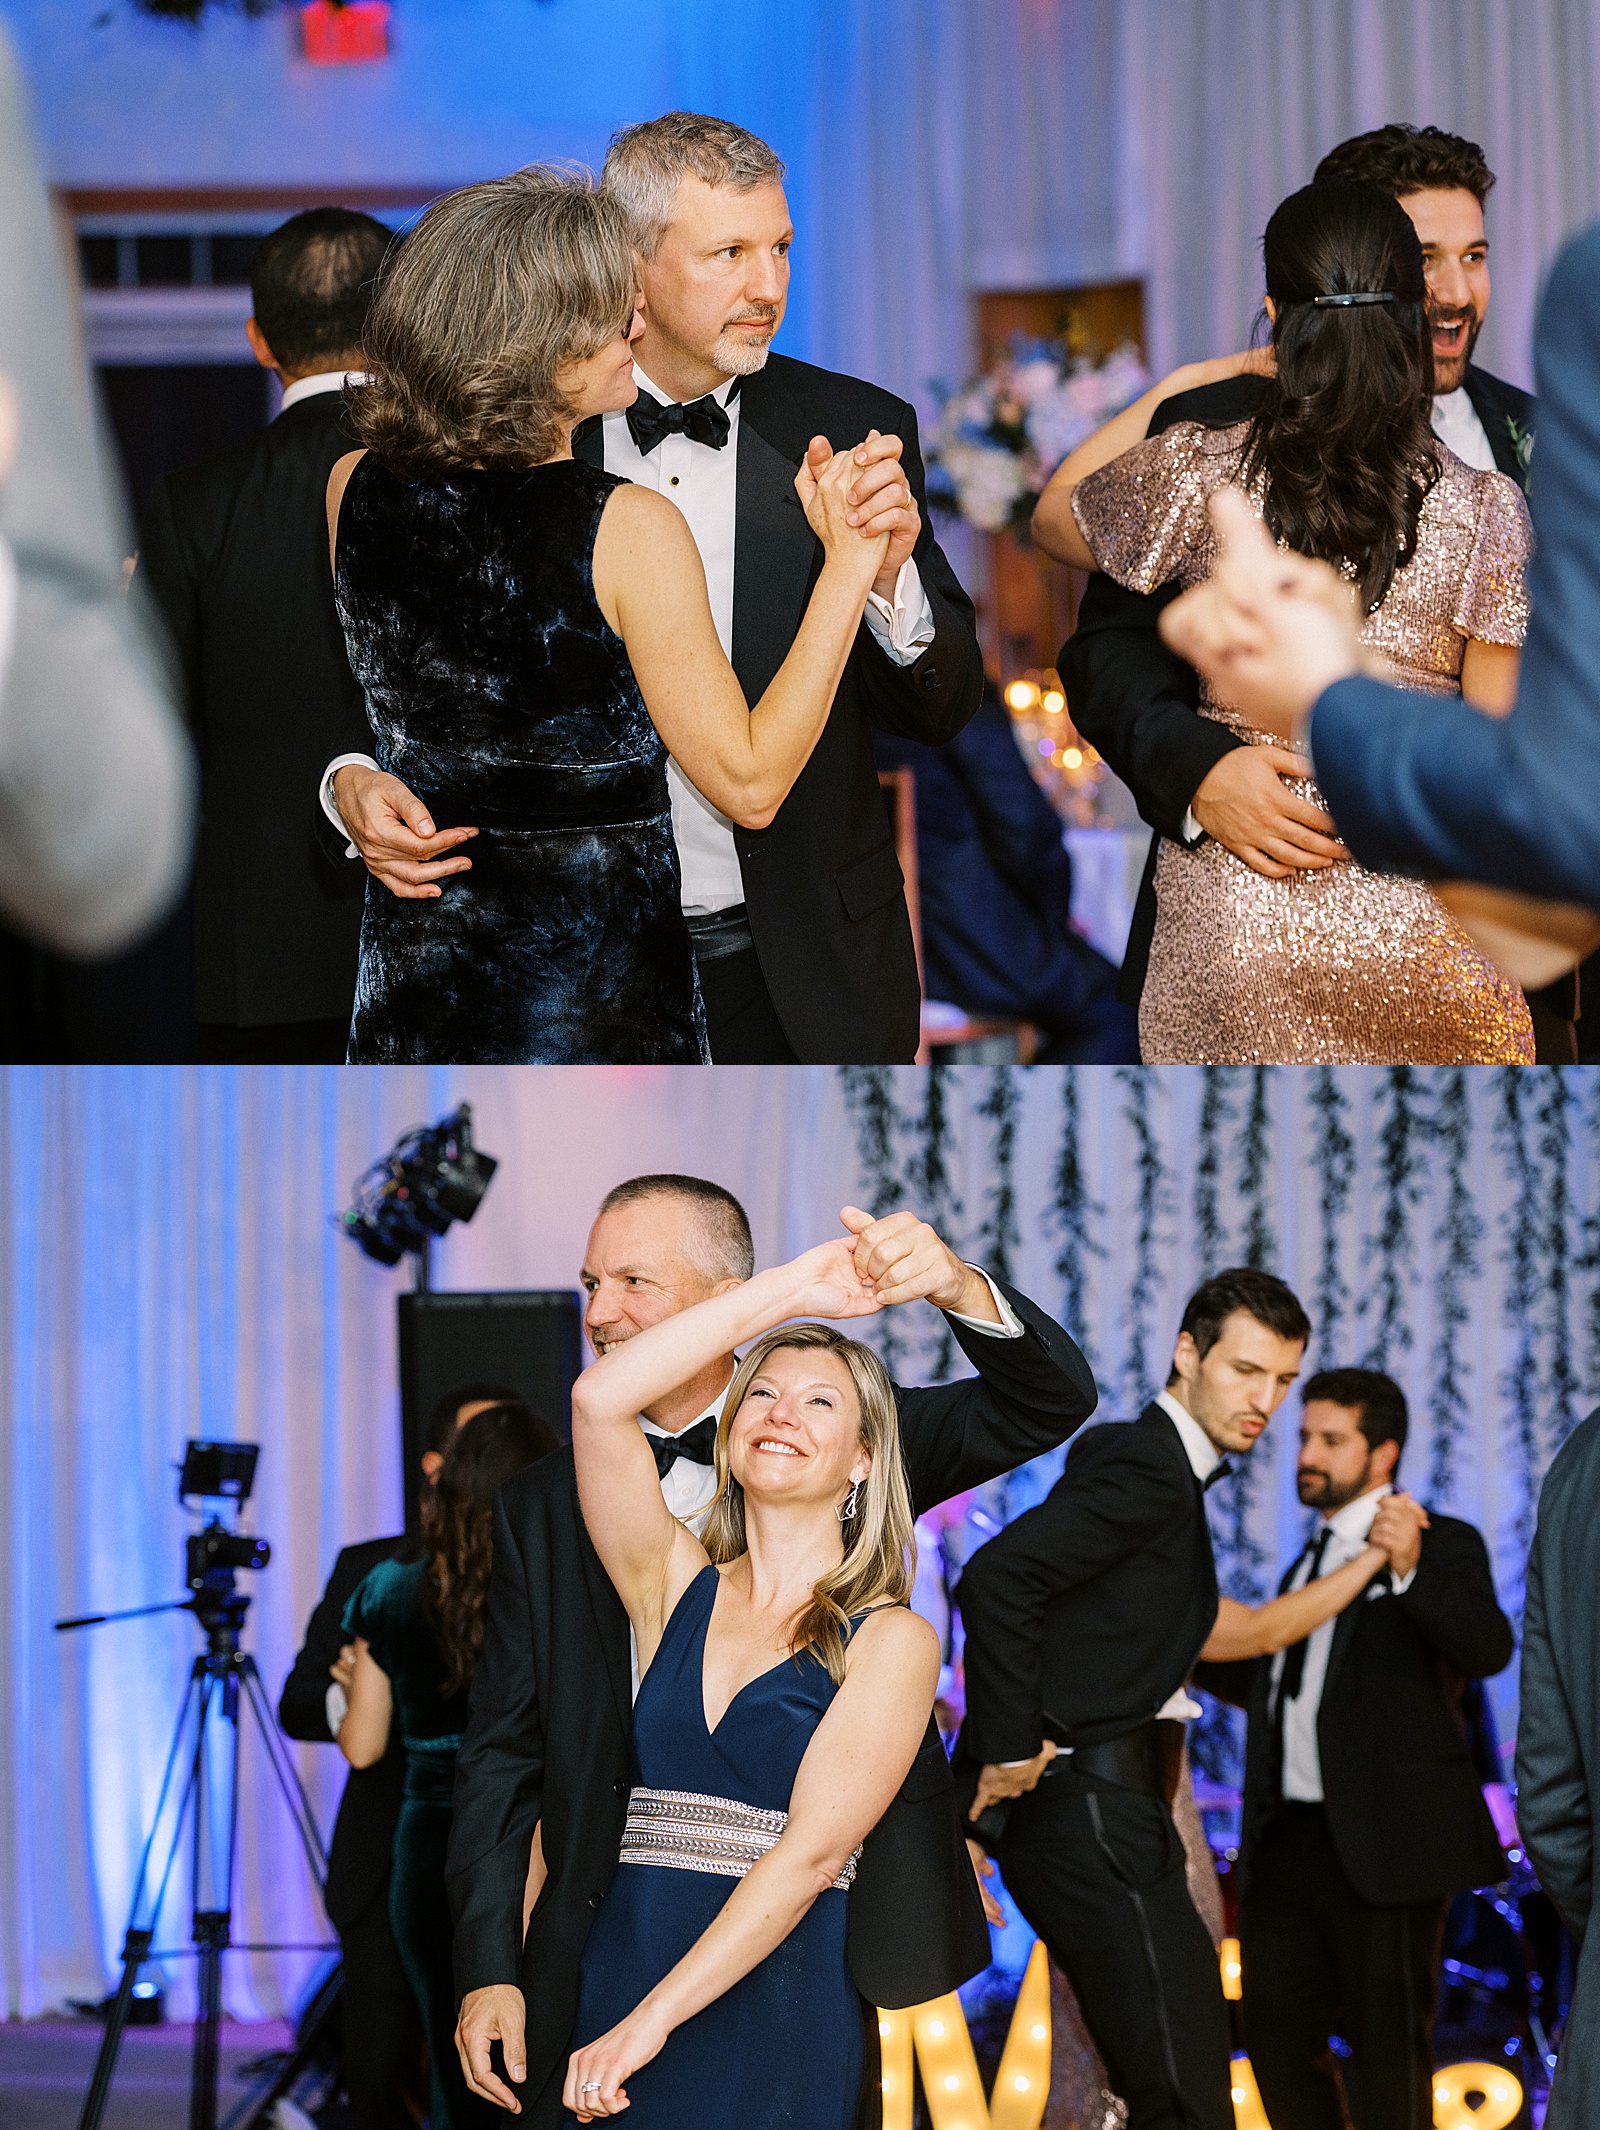 Guests dancing at fun wedding at Wequassett Resort in Cape Cod